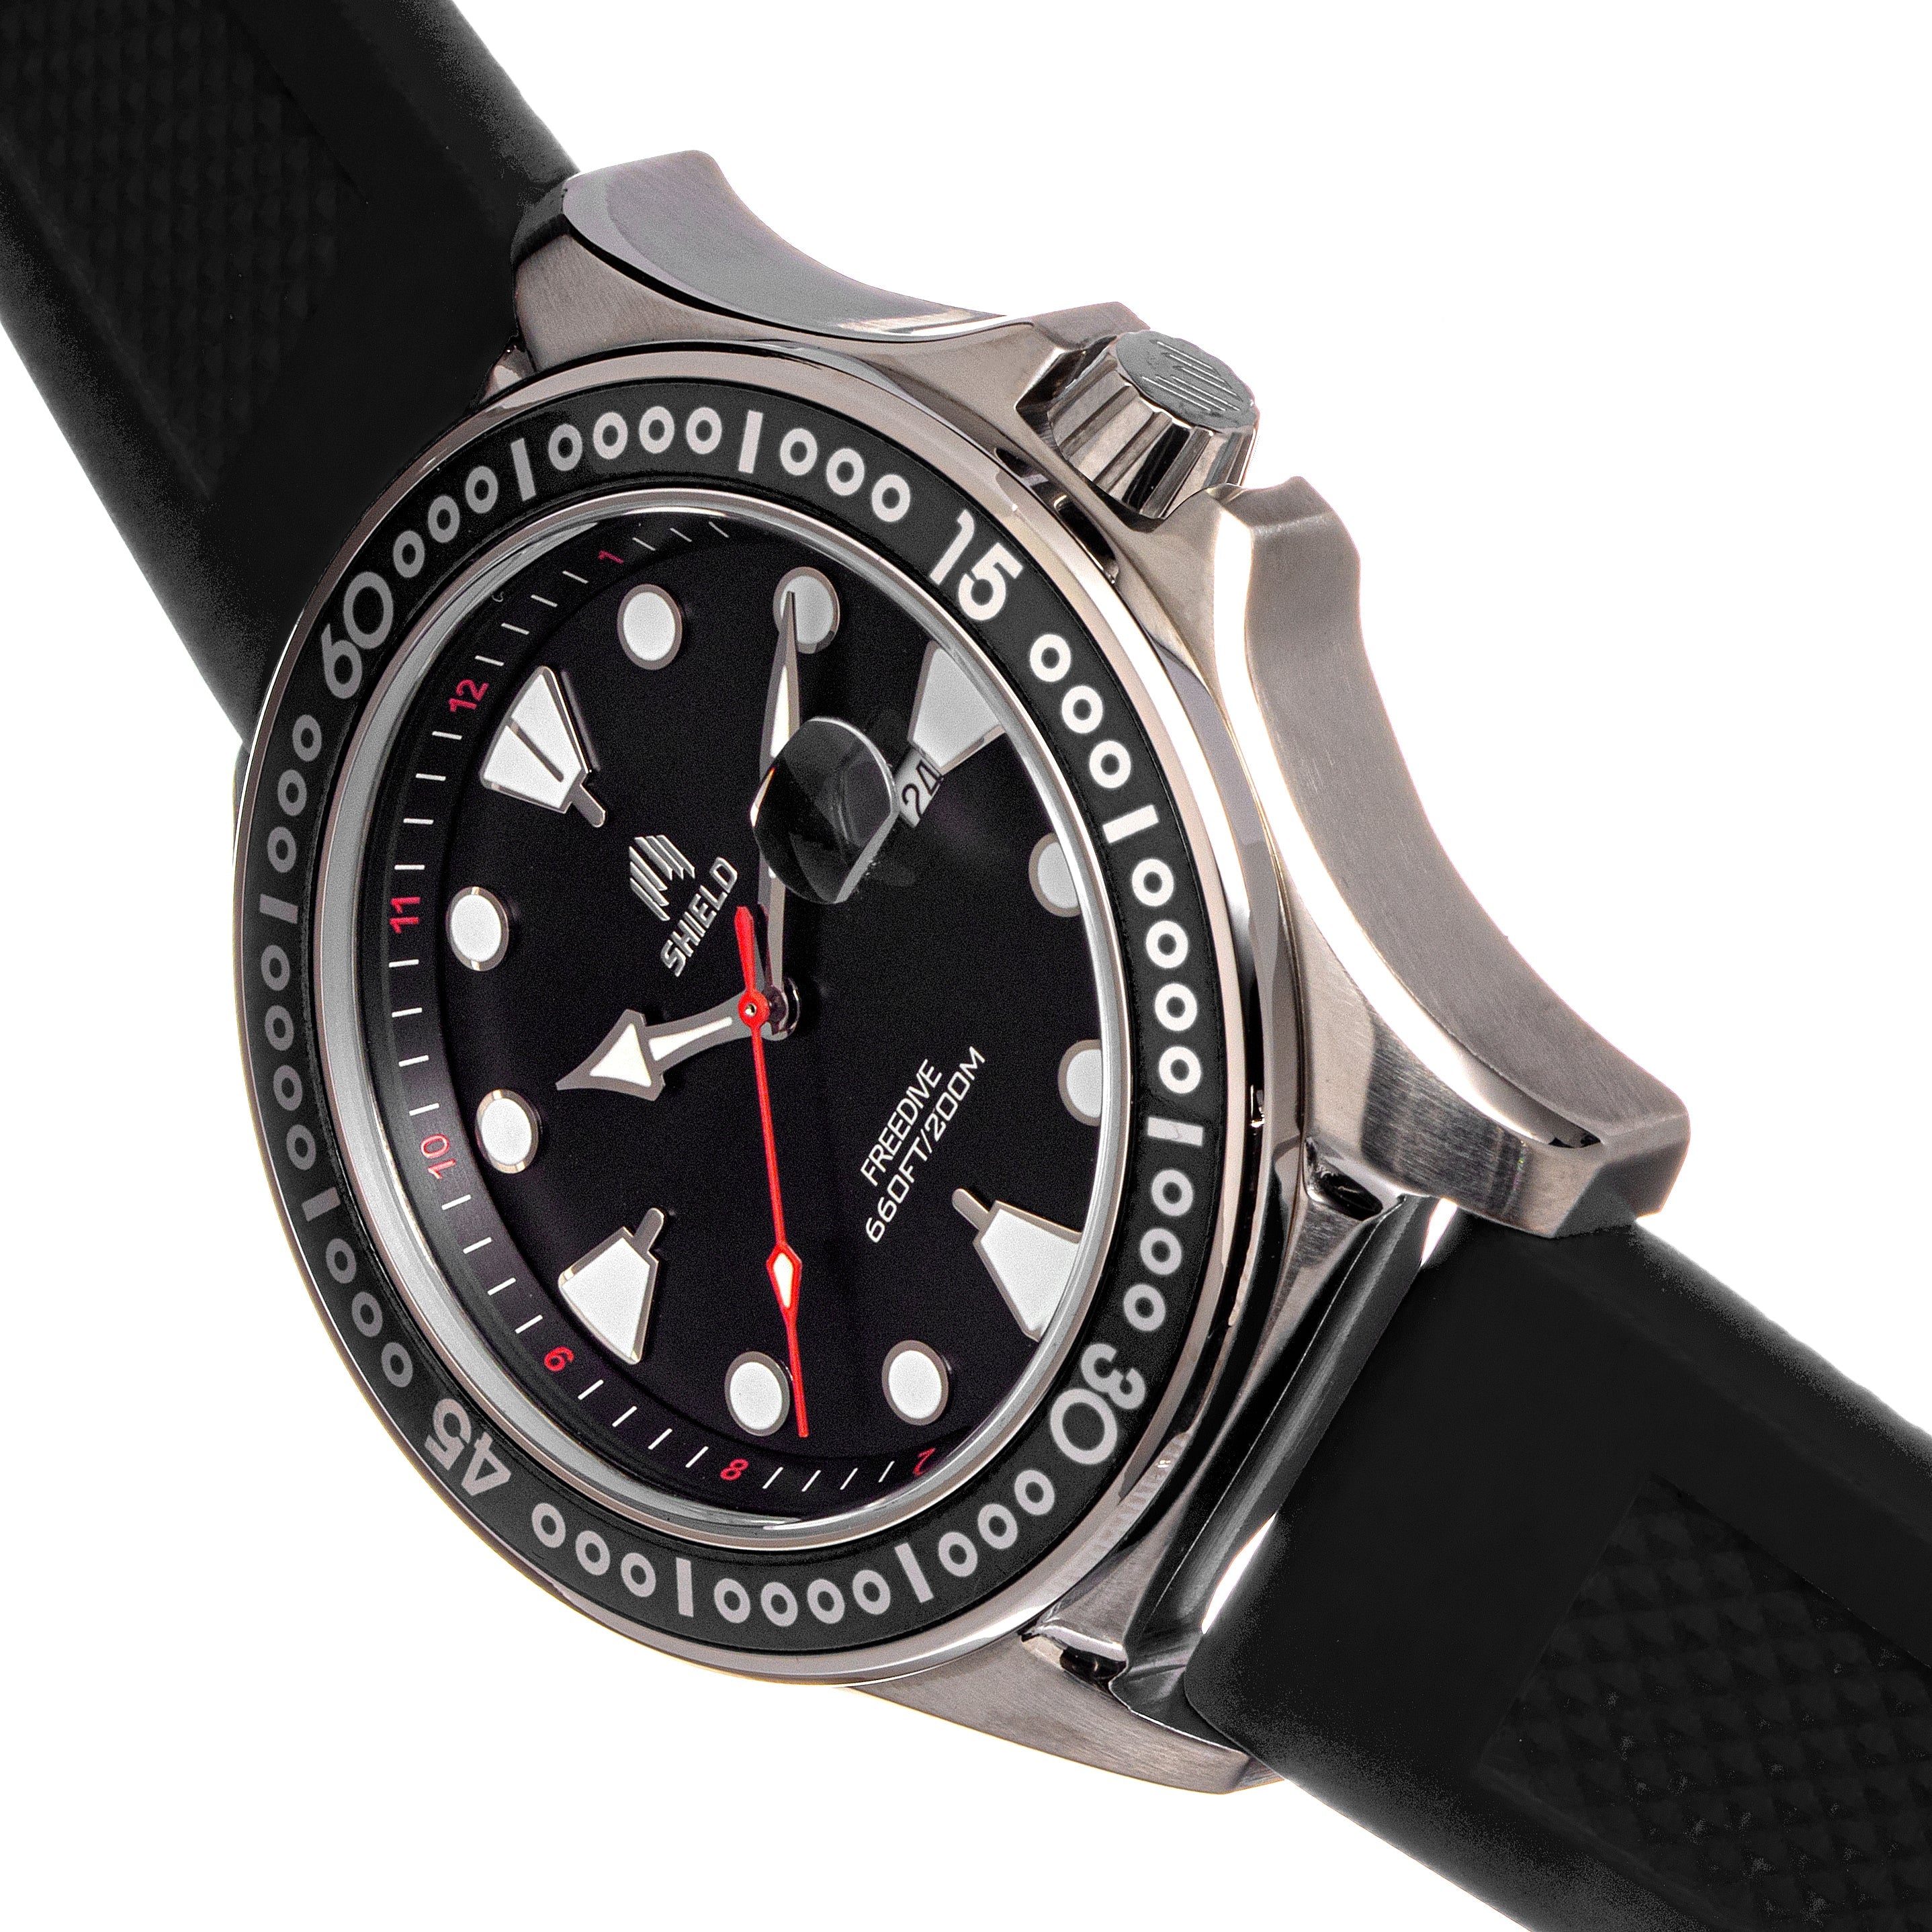 Shield Freedive Strap Watch w/Date - Black/Silver - SLDSH115-1